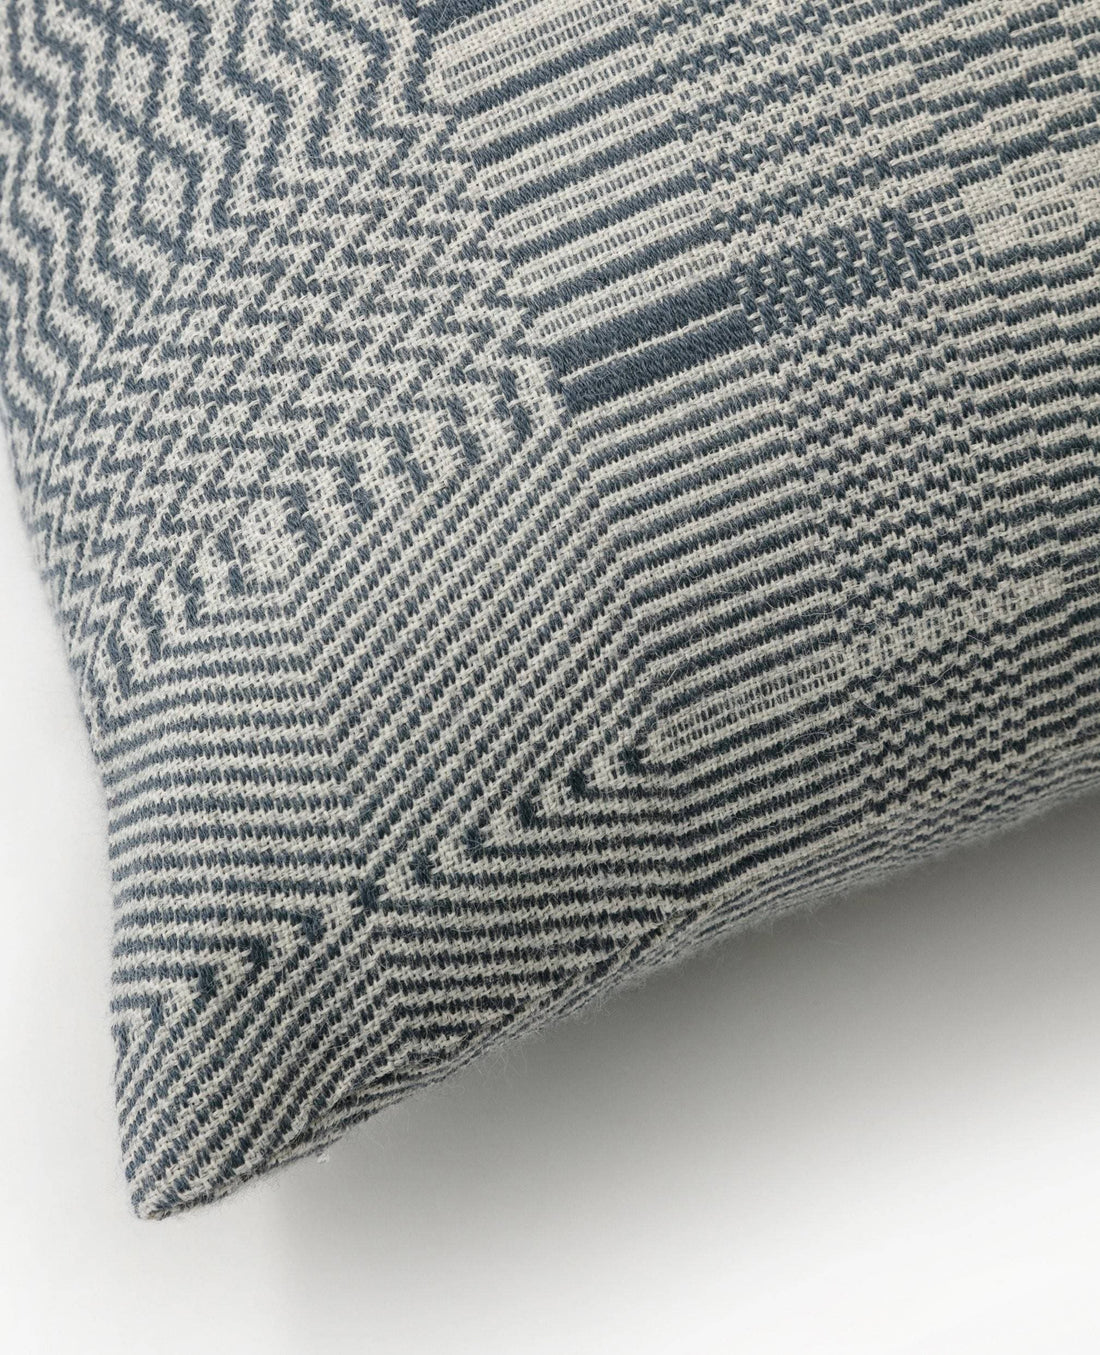 Vandre Overshot Cushion - Shaker Blue / Mist Grey